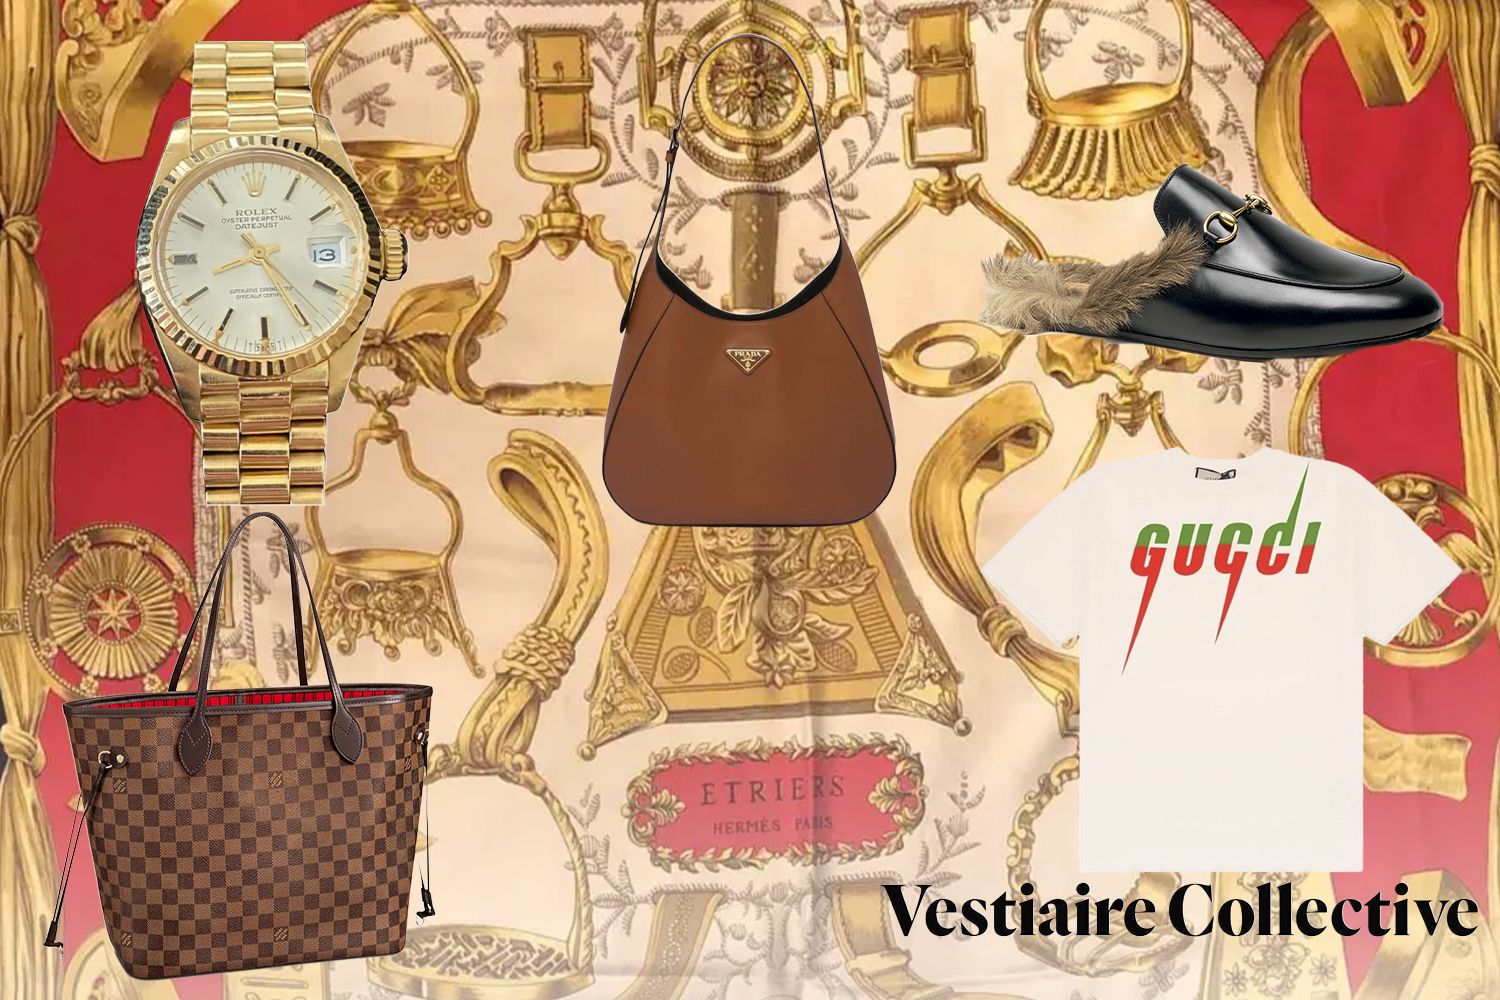 Bolsos de mano Speedy Louis Vuitton para Mujer - Vestiaire Collective